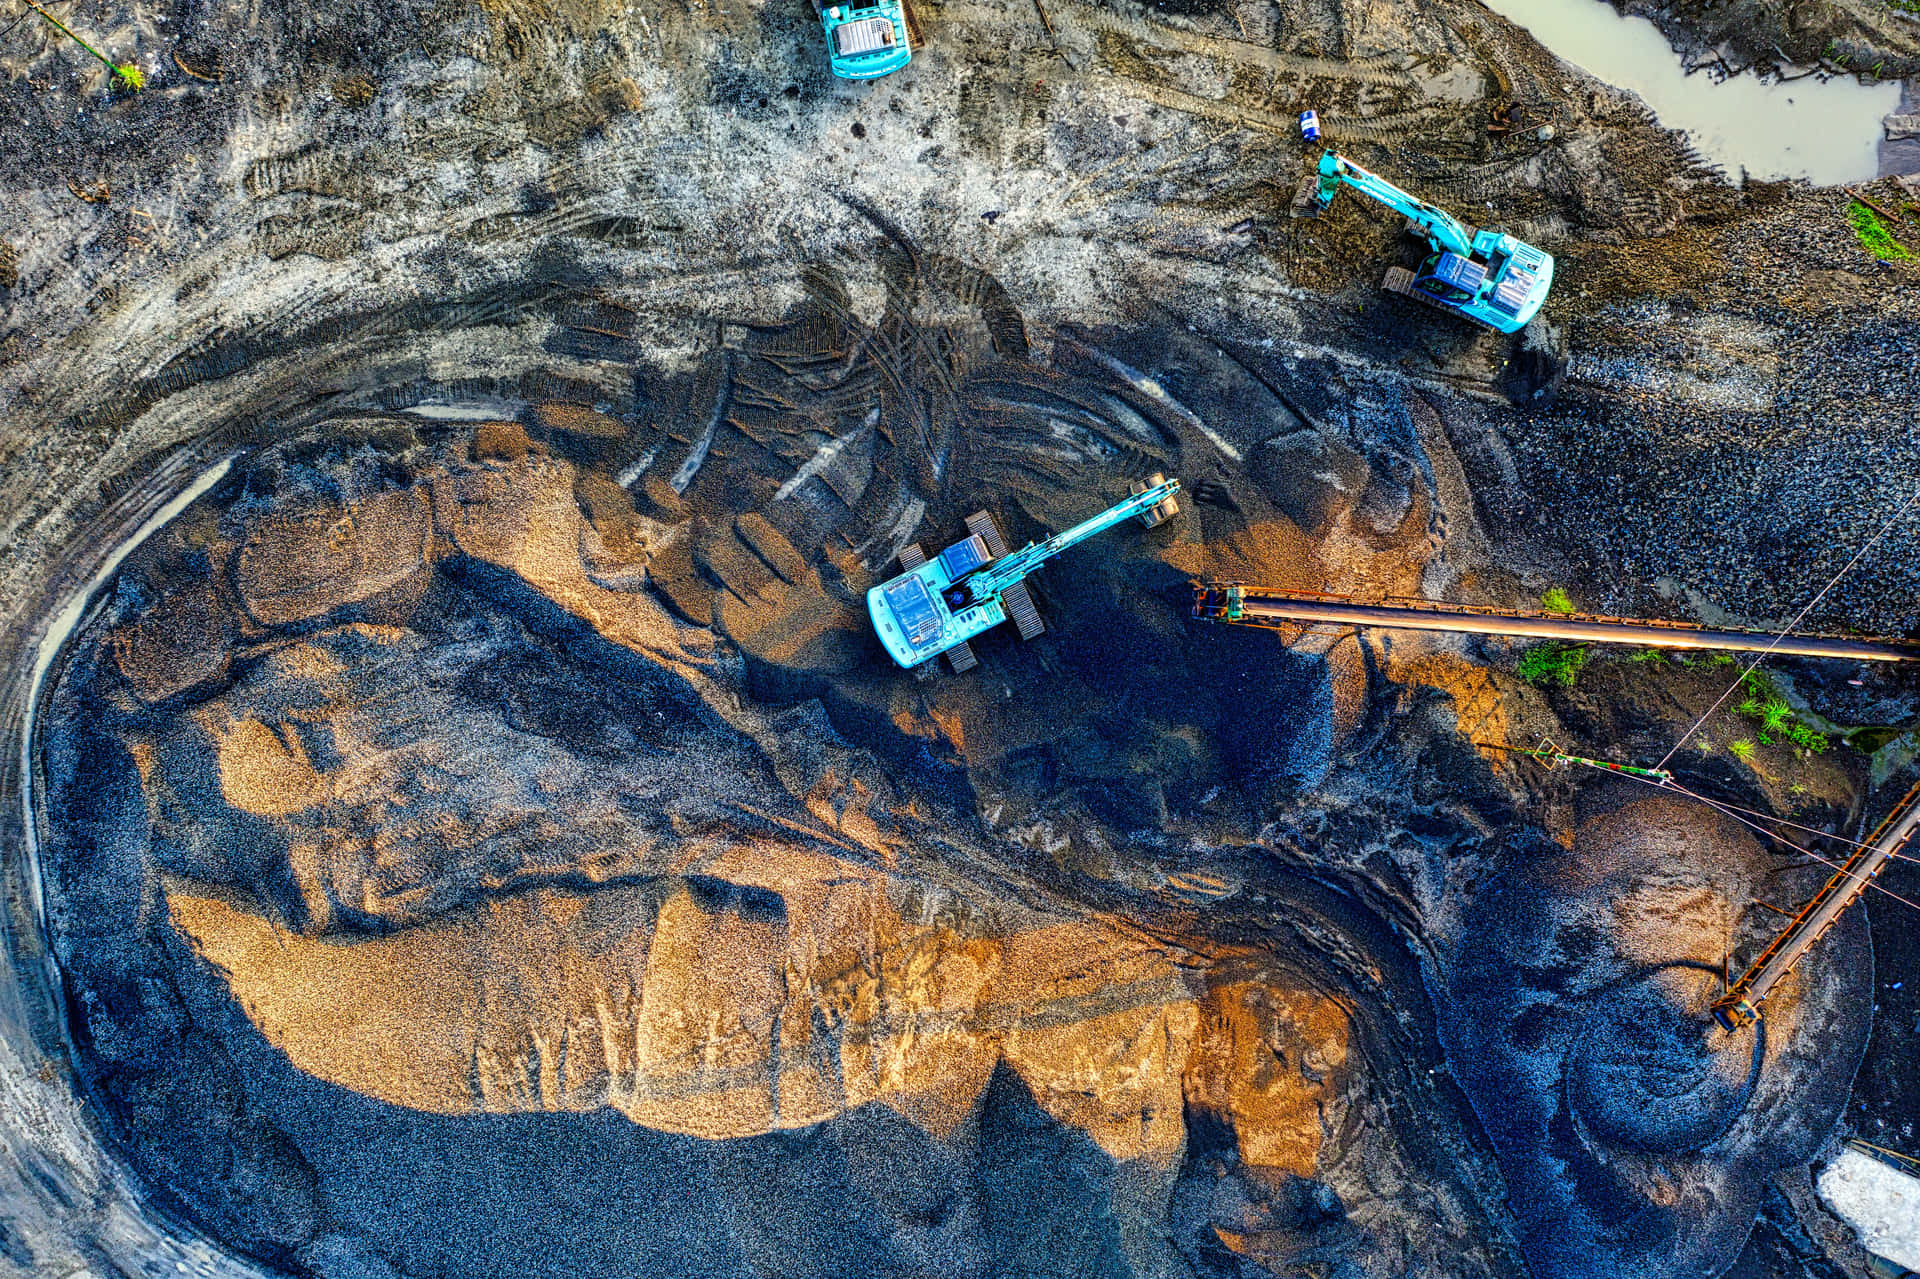 Minerei Northern Territory, Australien Udvinder Dyrebare Ressourcer.